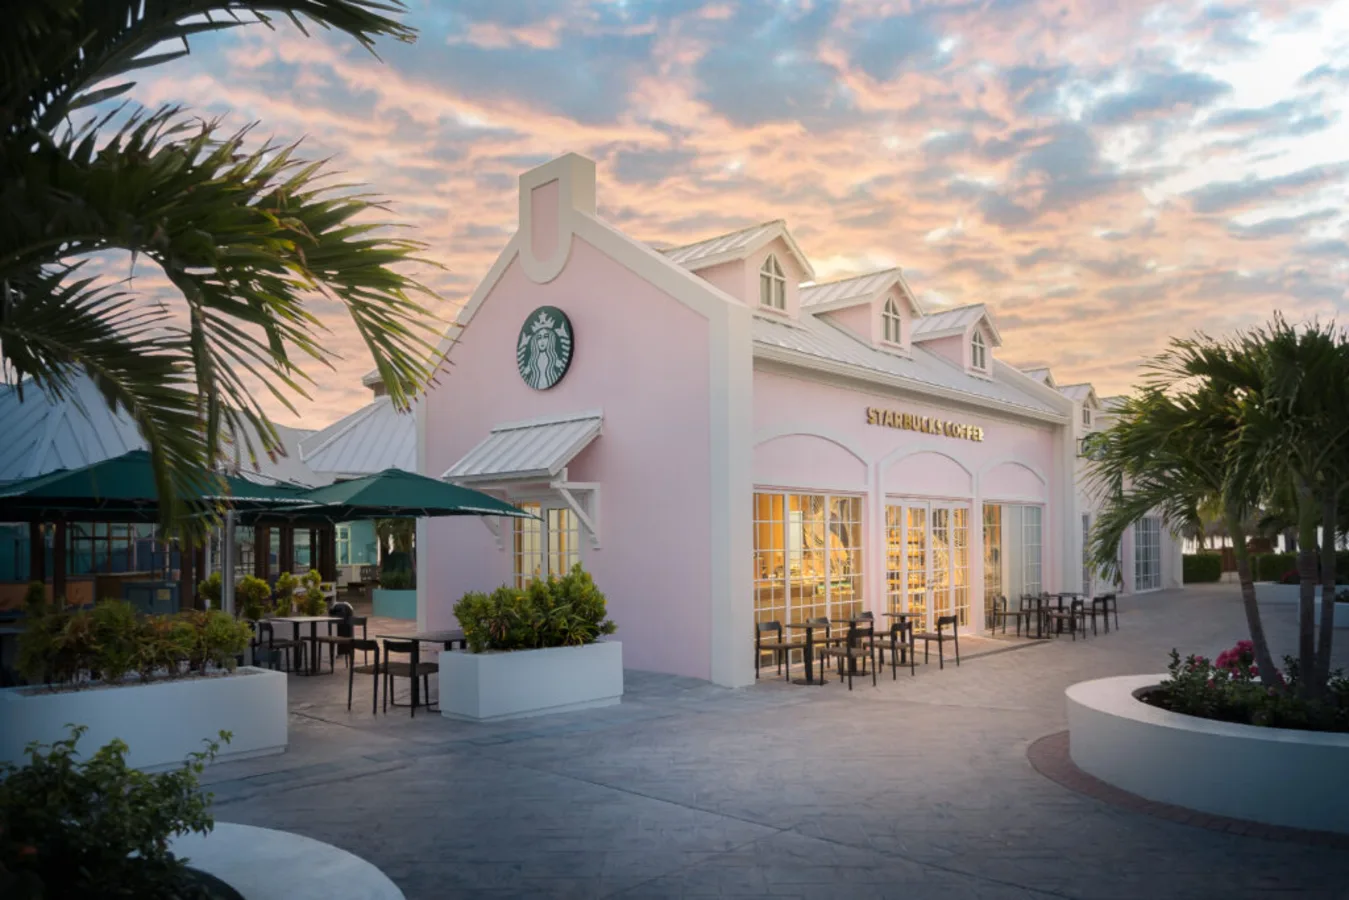 Unique Starbucks Stores Around the World: Turks and Caicos